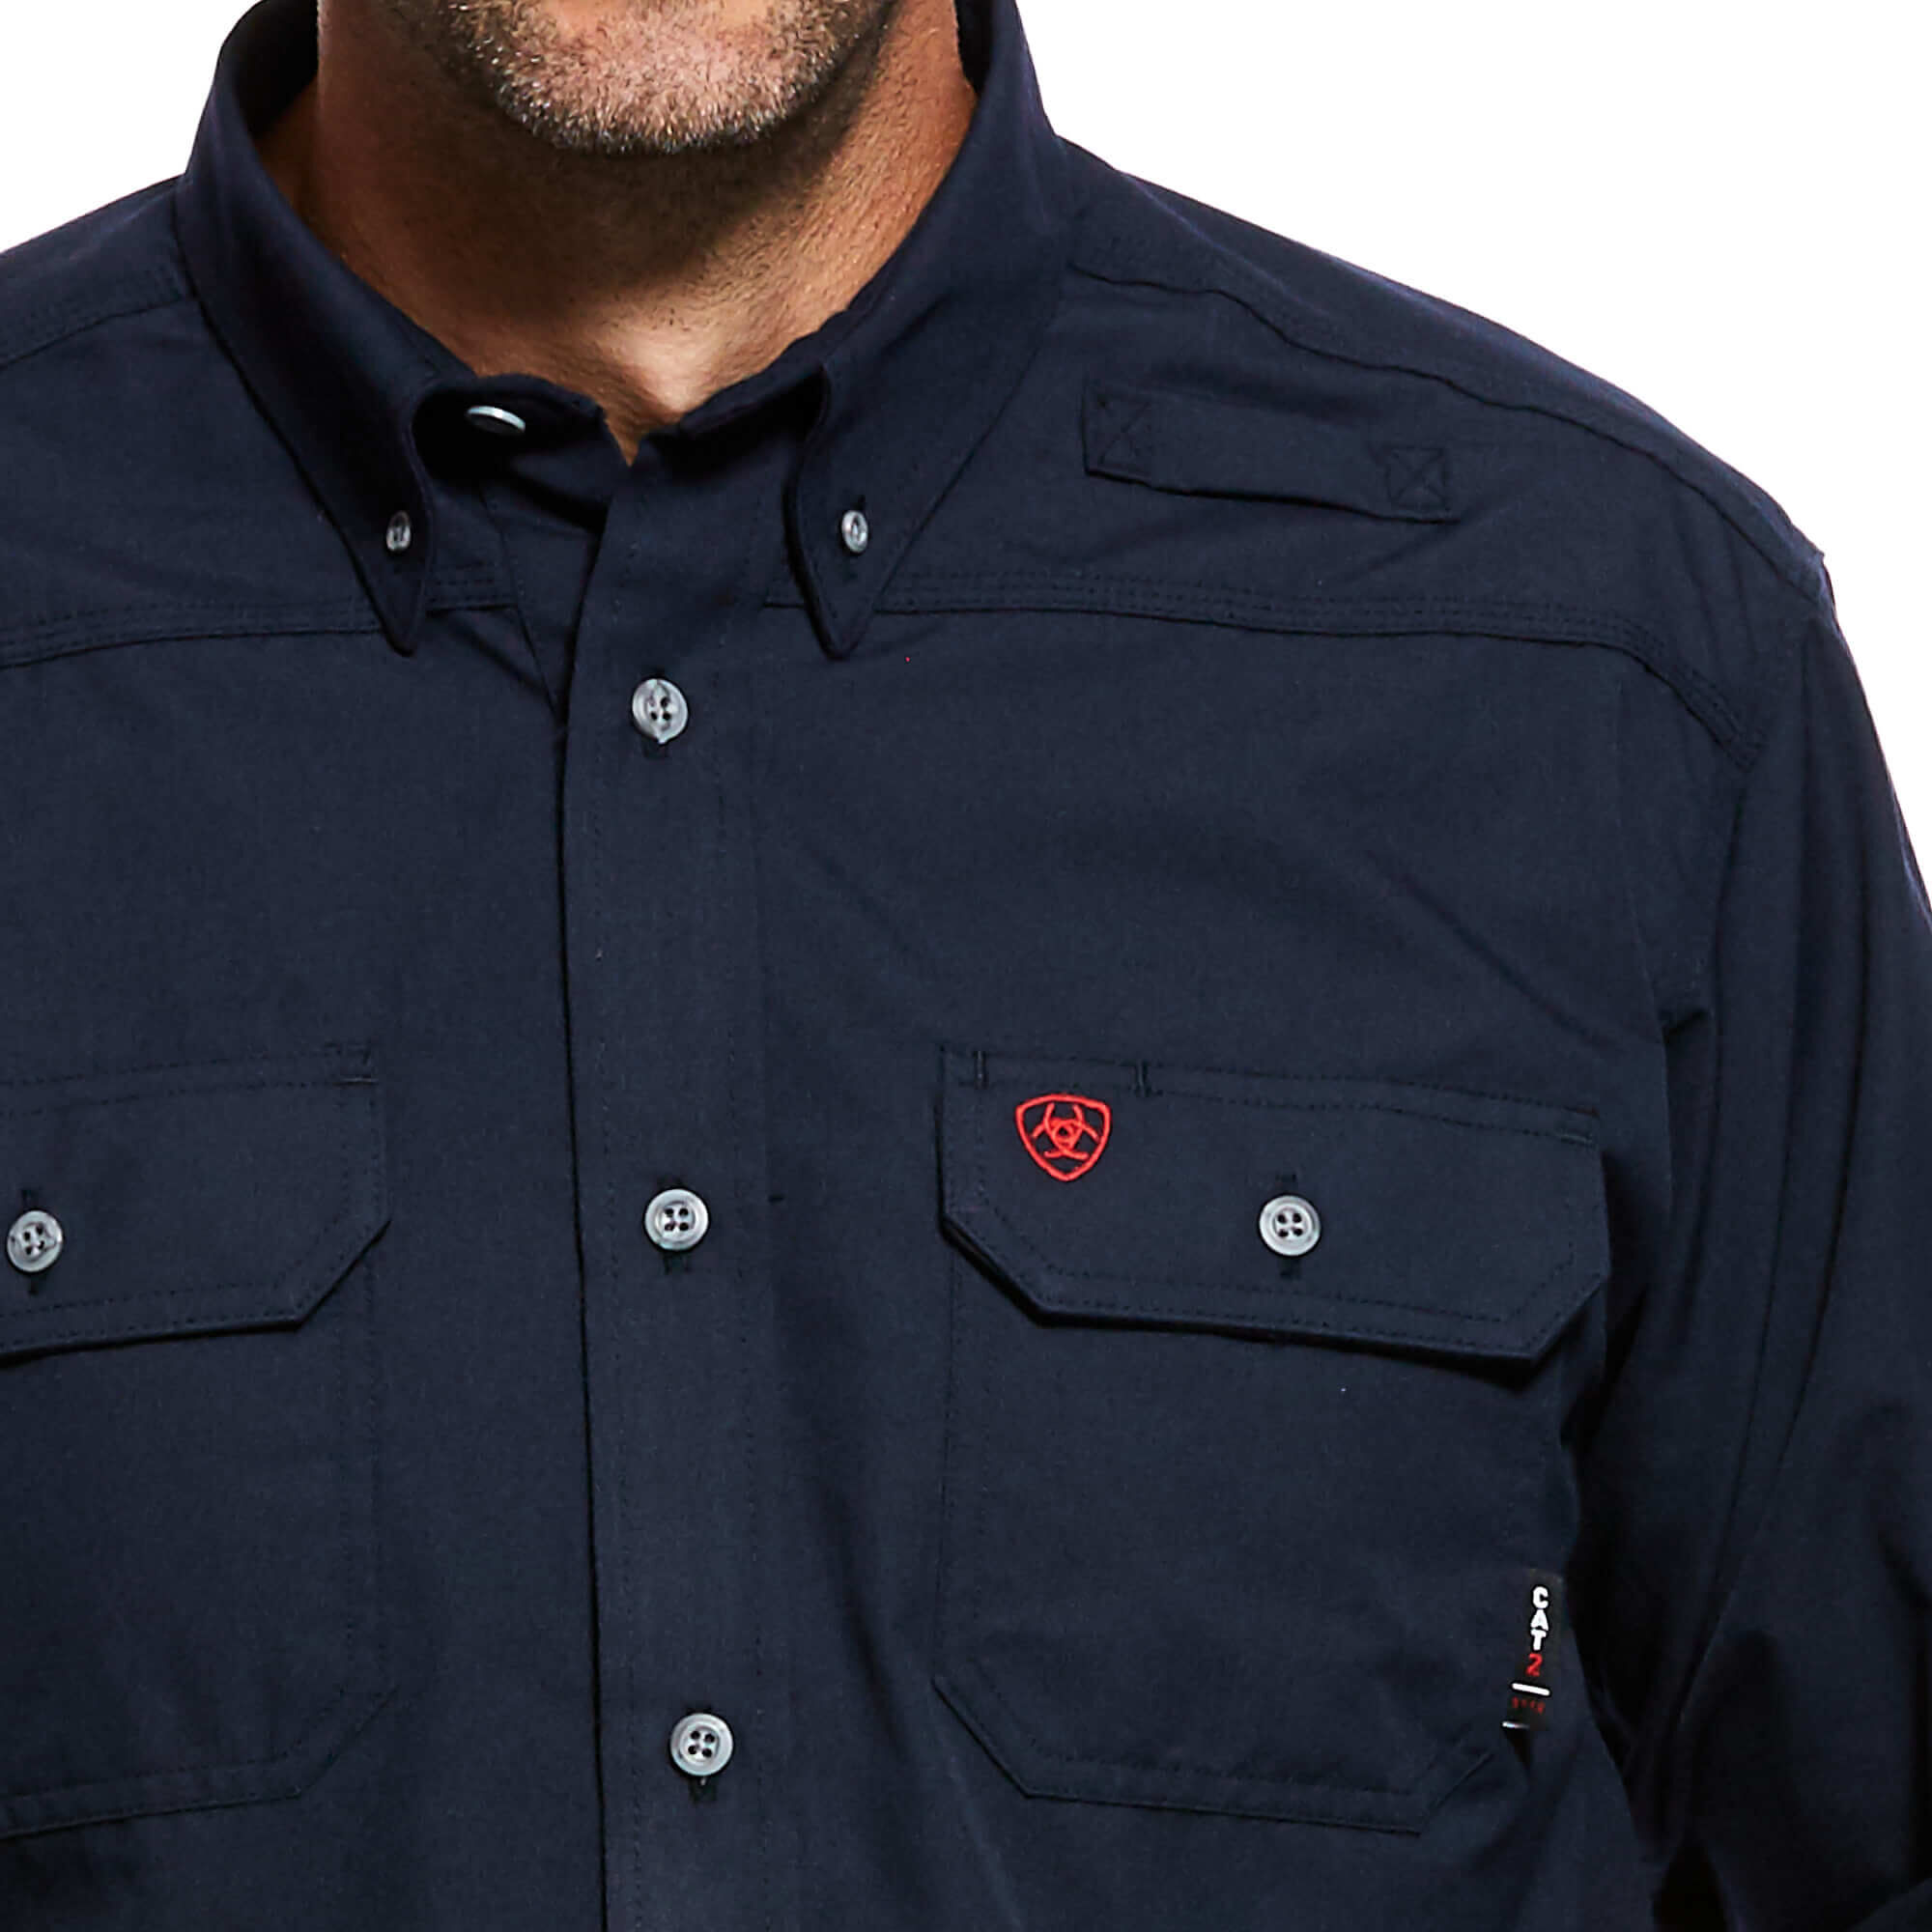 Fire Resistant Shirt in A Light Weight Fabric Fire Retardant Shirt for The Warm Months Light Weight FR Shirt for Men Large, Blue 